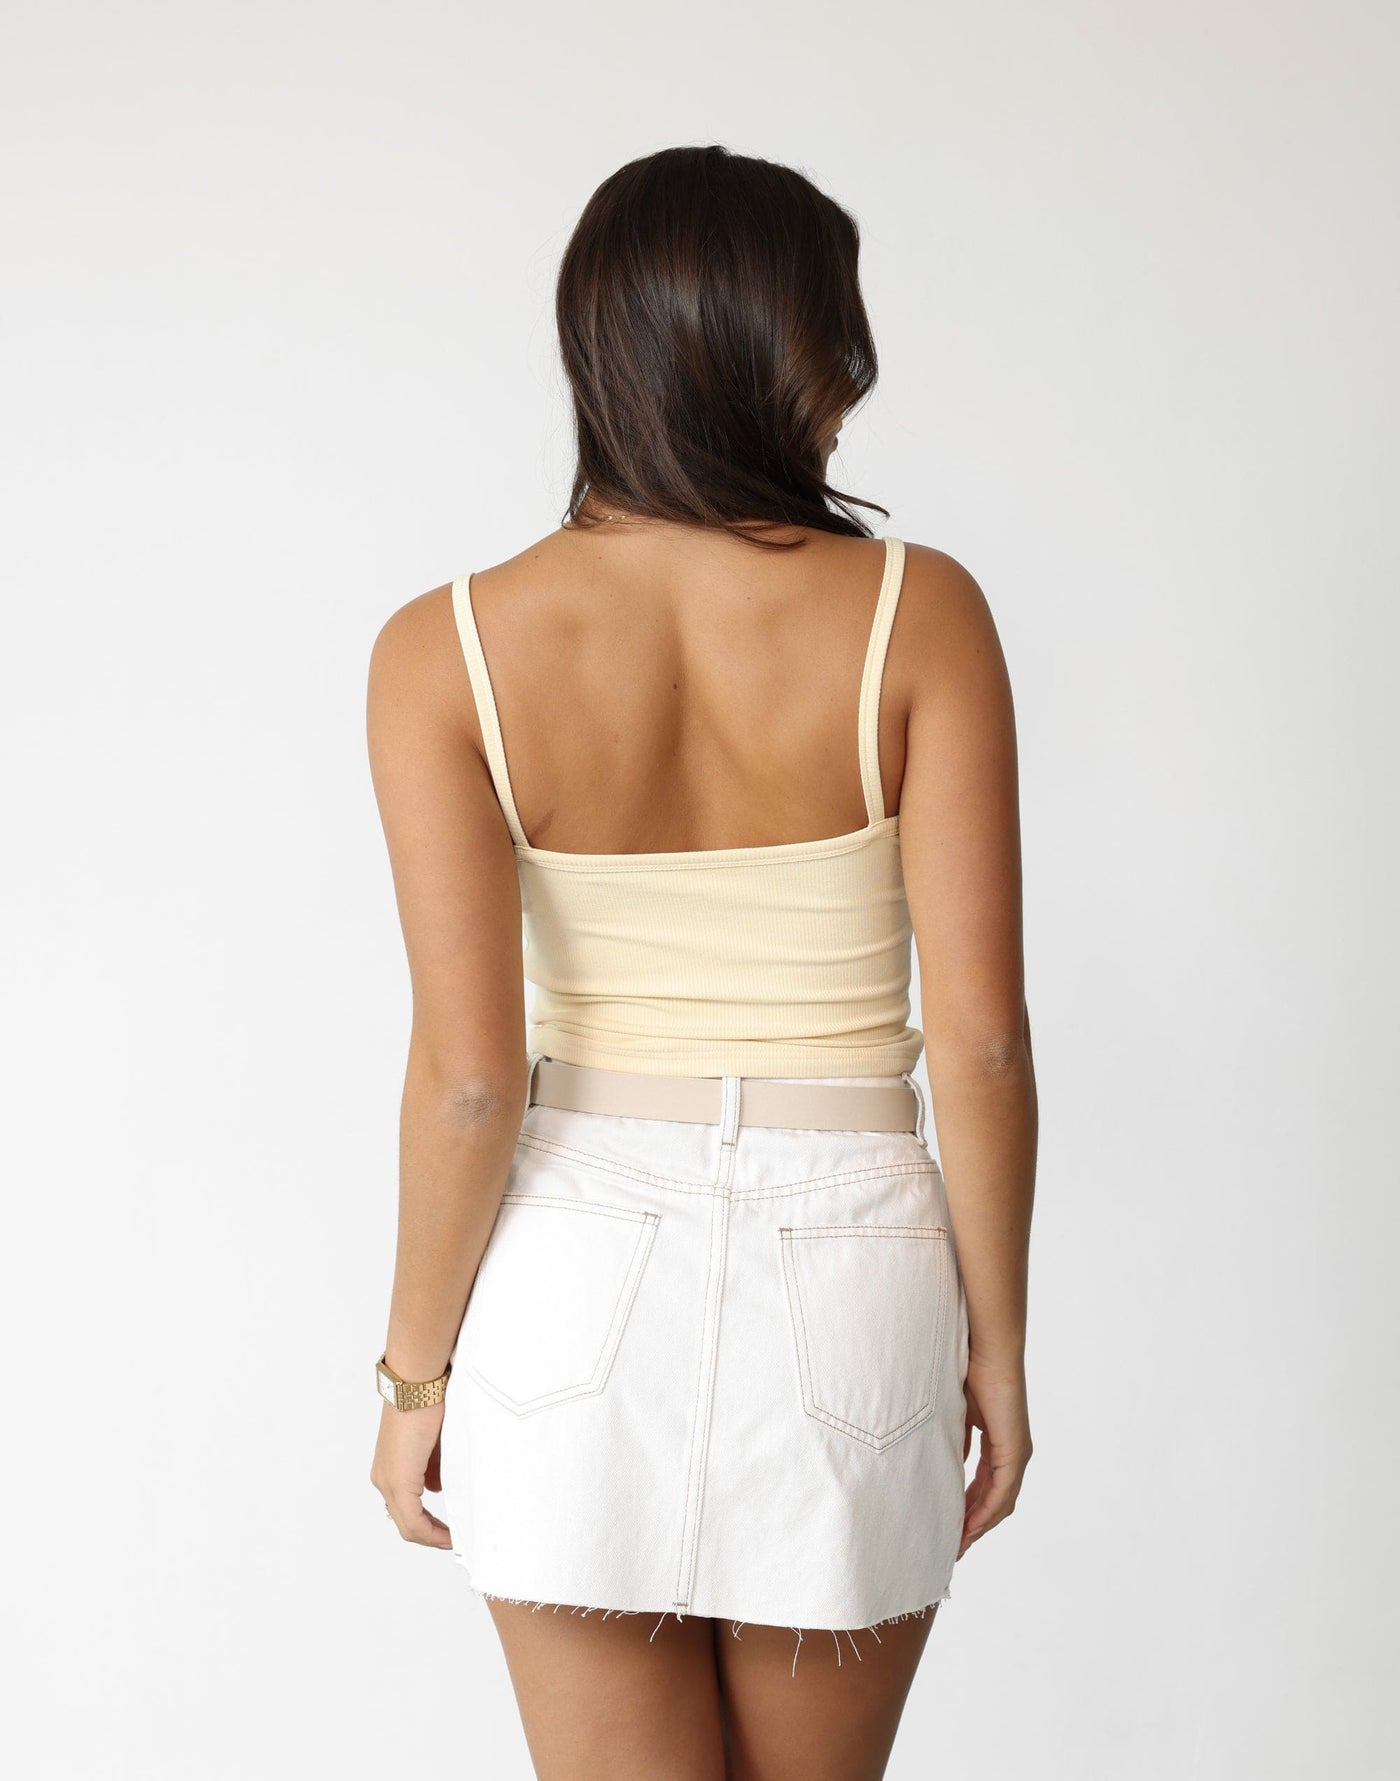 Rowan Denim Mini Skirt (Off White) | Charcoal Clothing Exclusive - Raw Edge High Waisted Mini Skirt - Women's Skirt - Charcoal Clothing